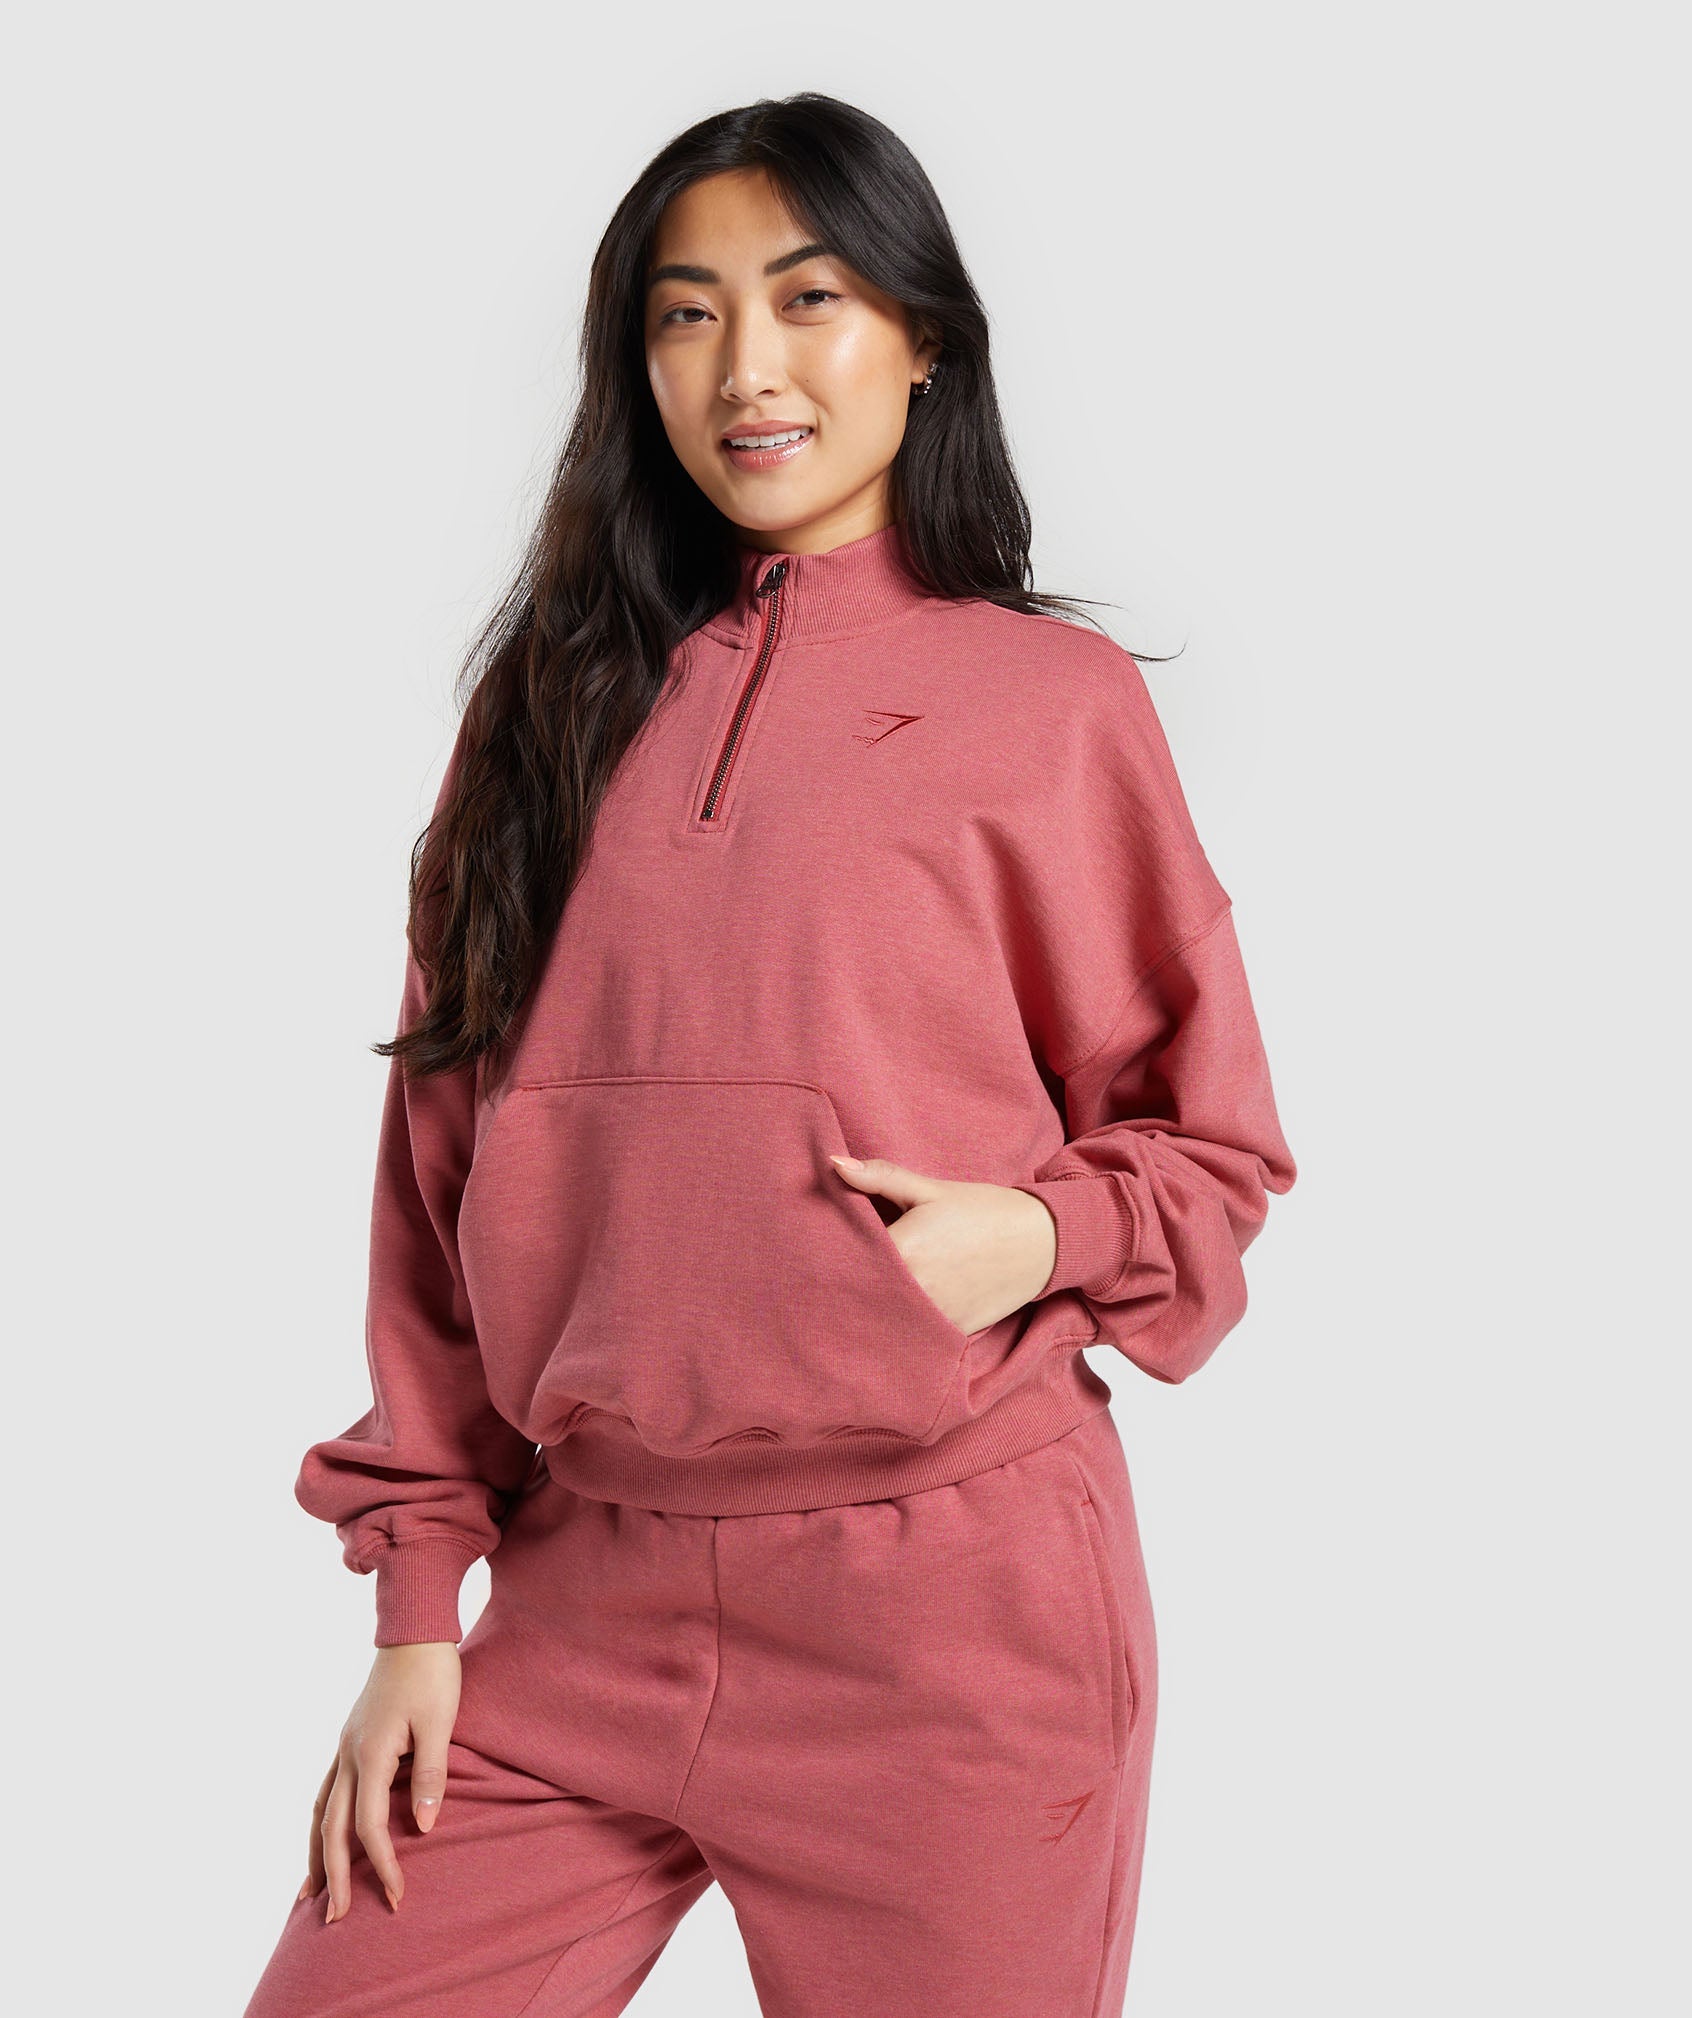 Pink 1/2 Zip Pullover Sweatshirt - Athletic apparel